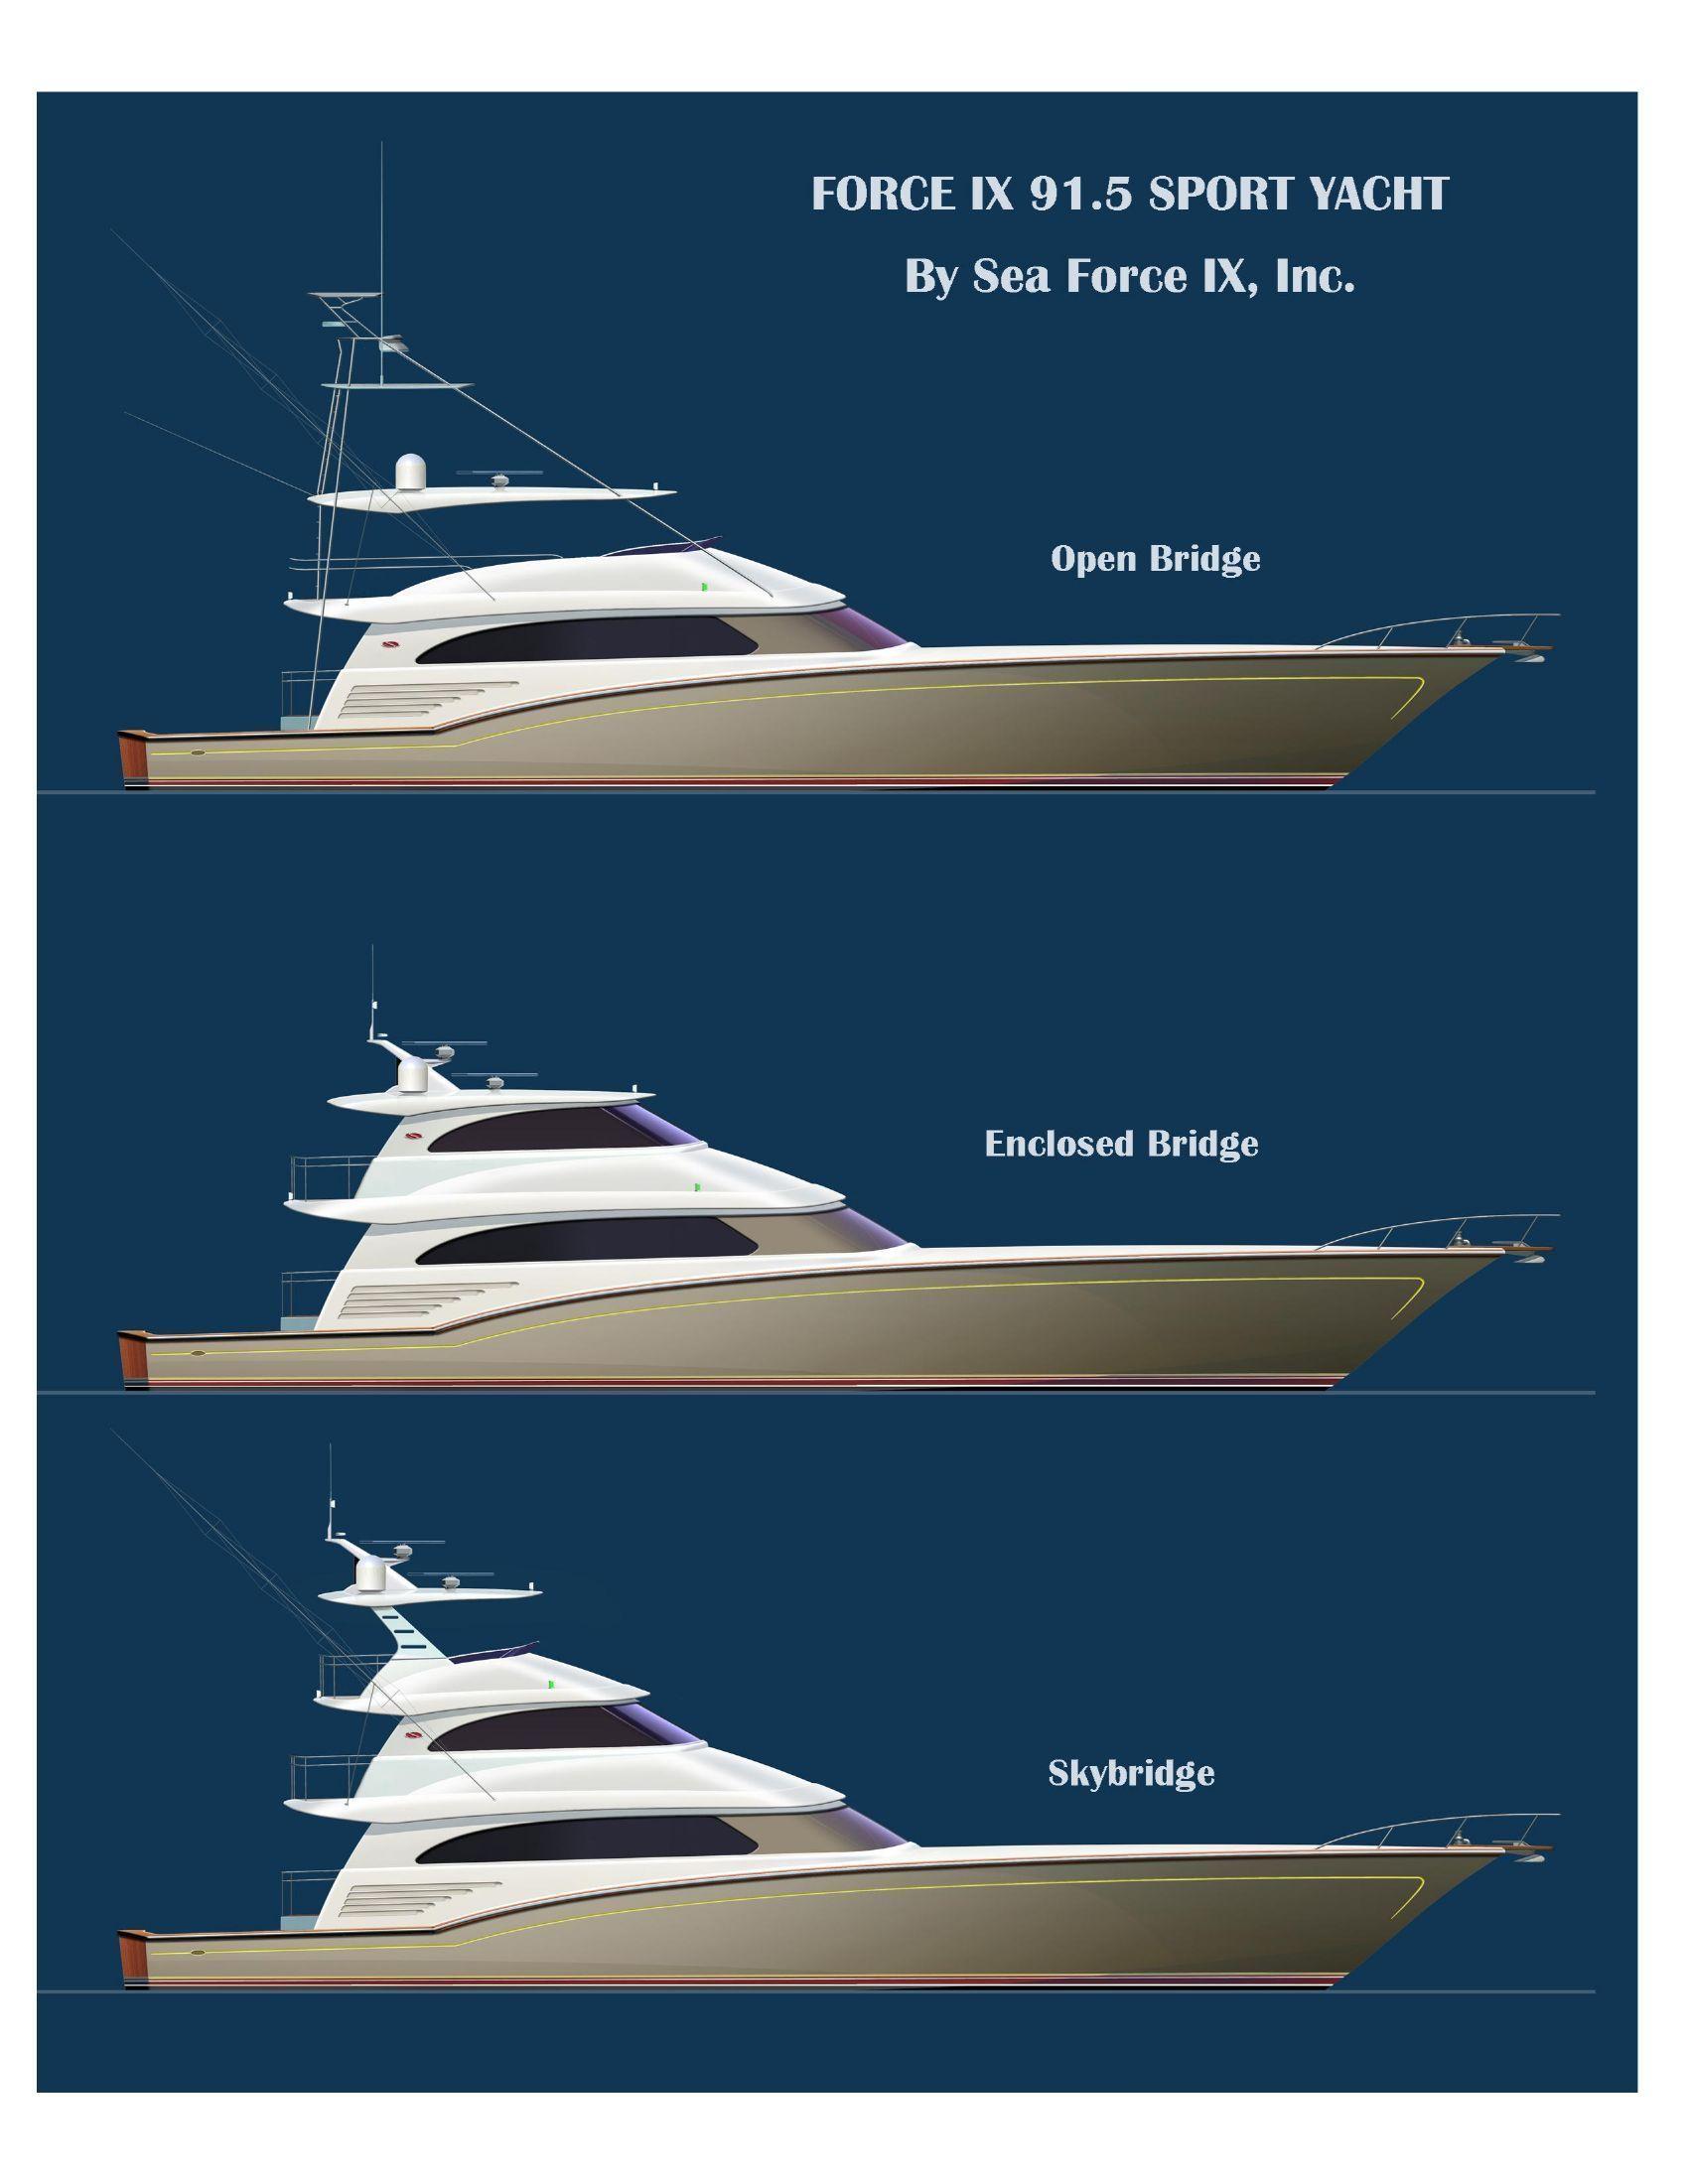 Sea Force IX Sport Yacht